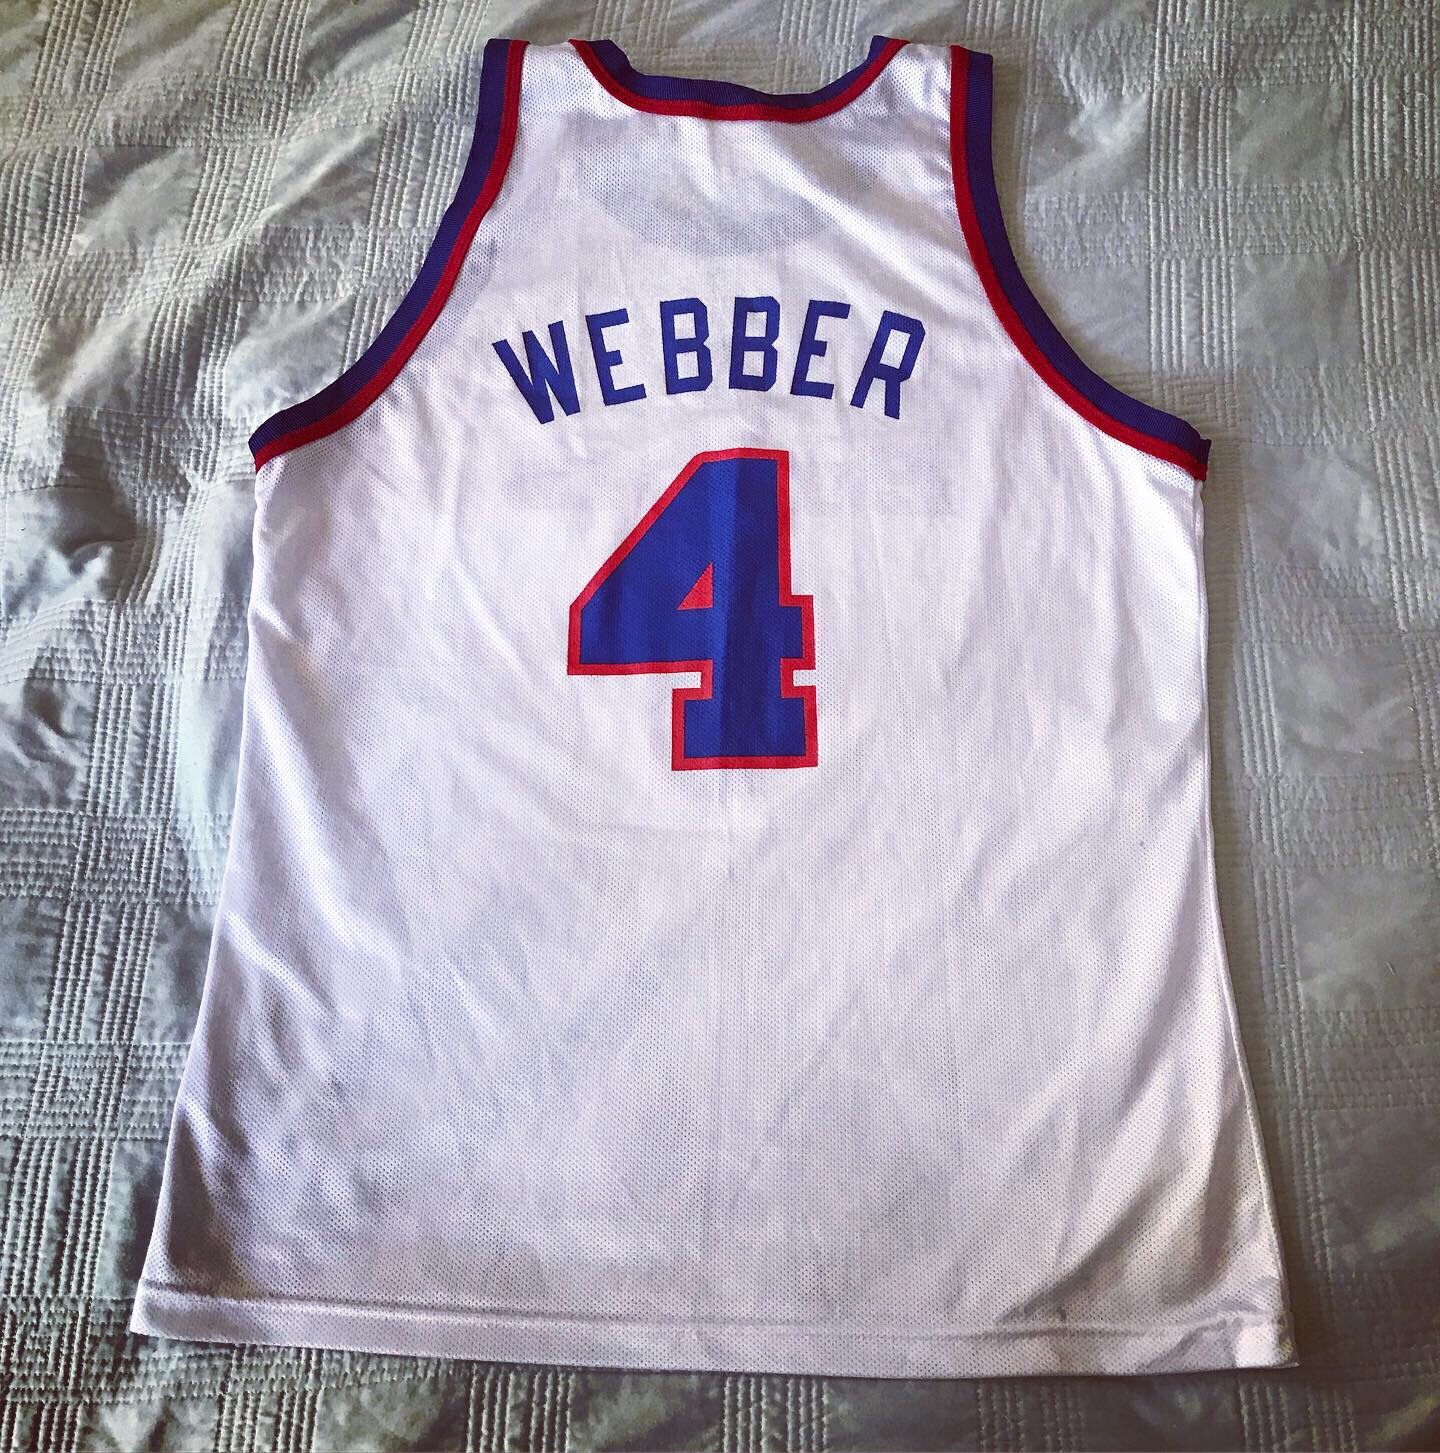 Vintage Washington Bullets Champion Chris Webber #2 Basketball